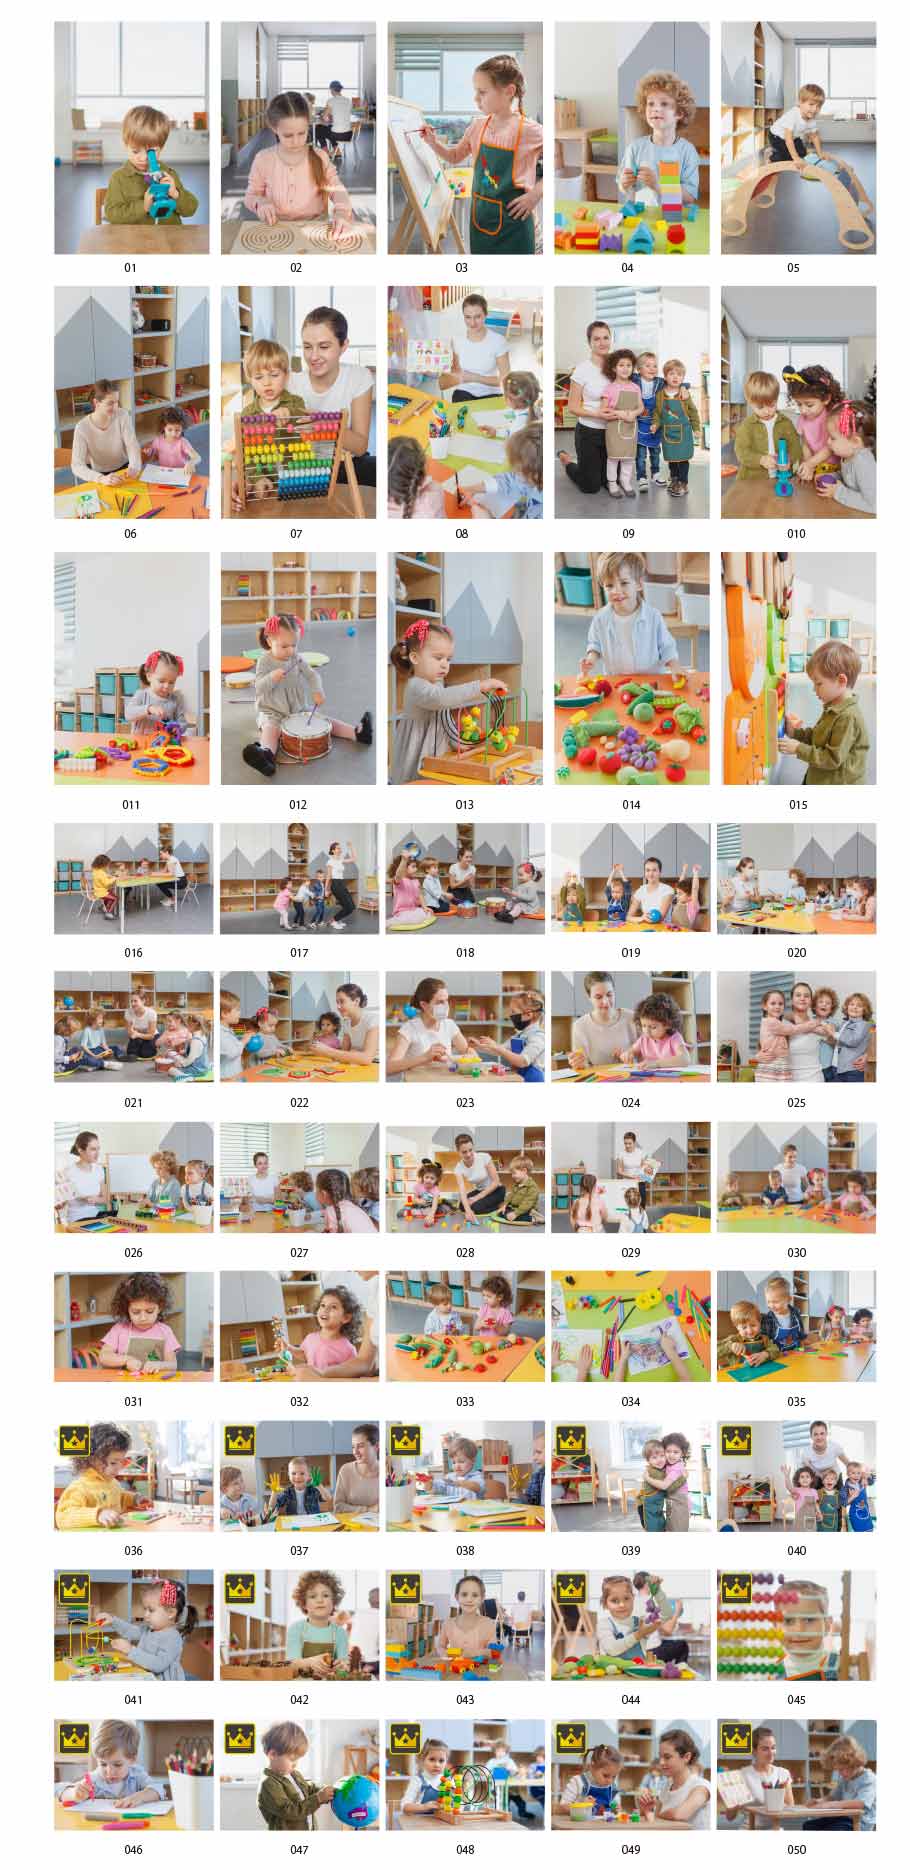 Preschool class images